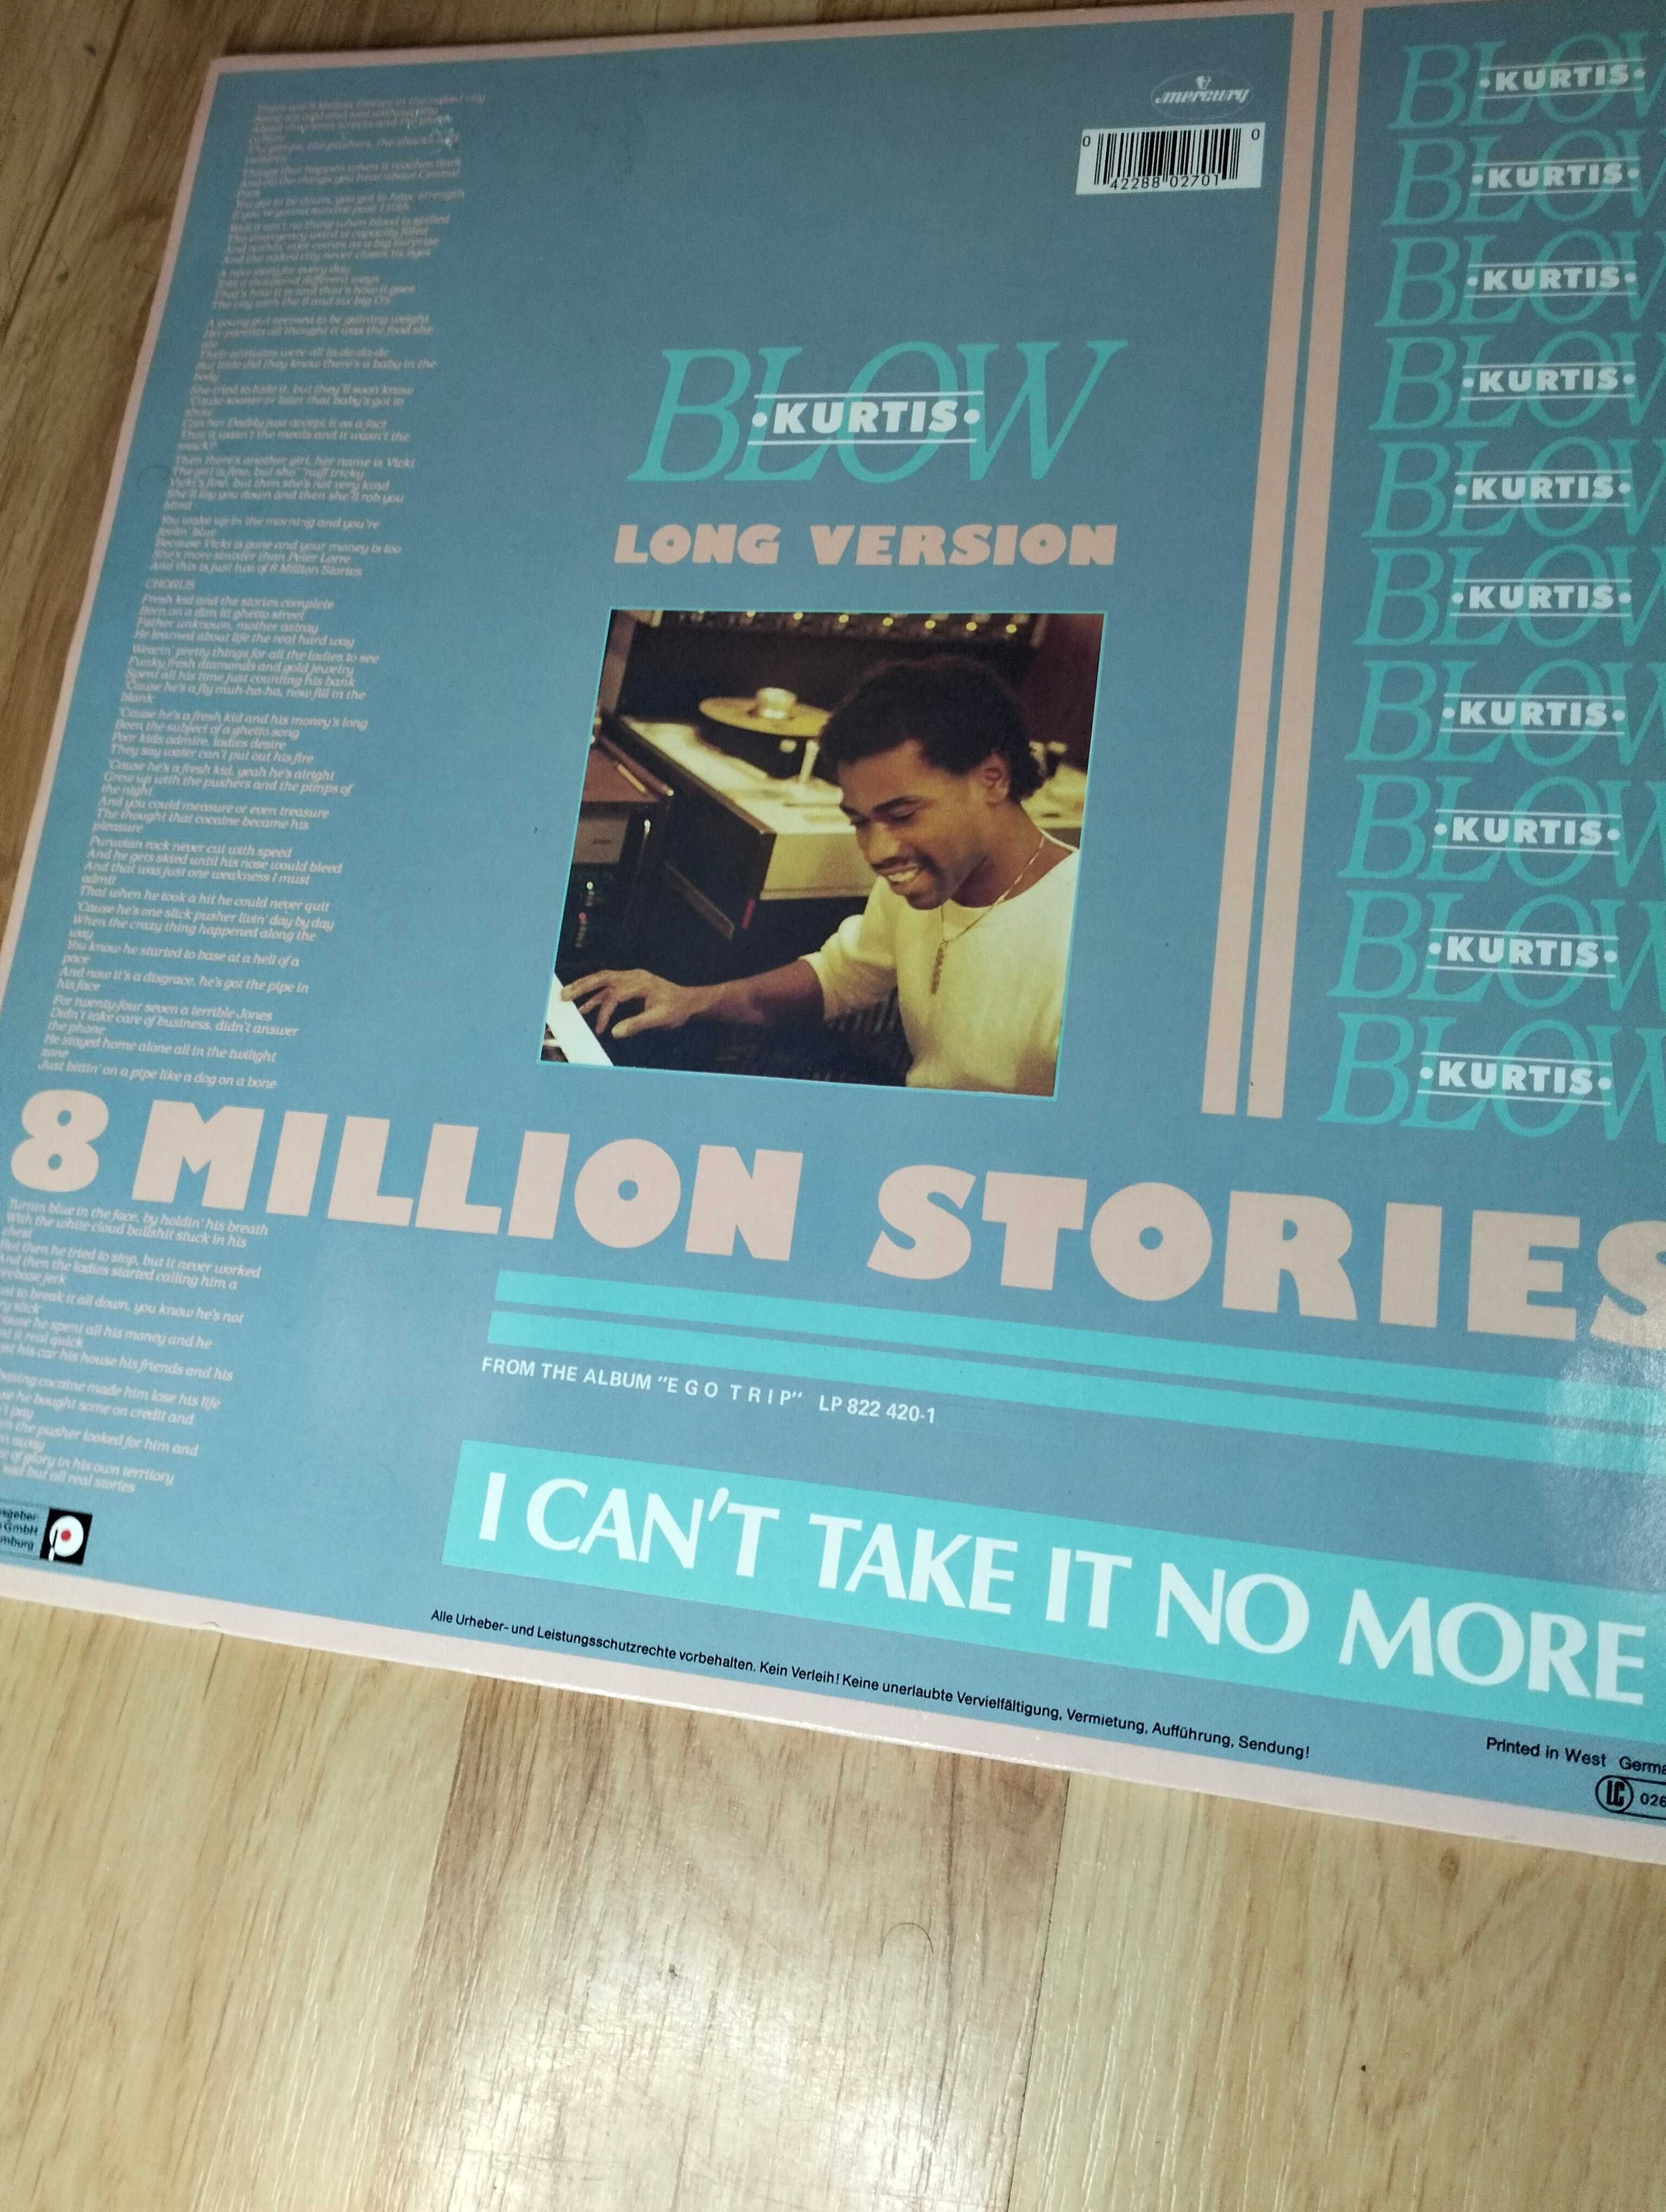 Kurtis Blow 8 million stories LP winyl